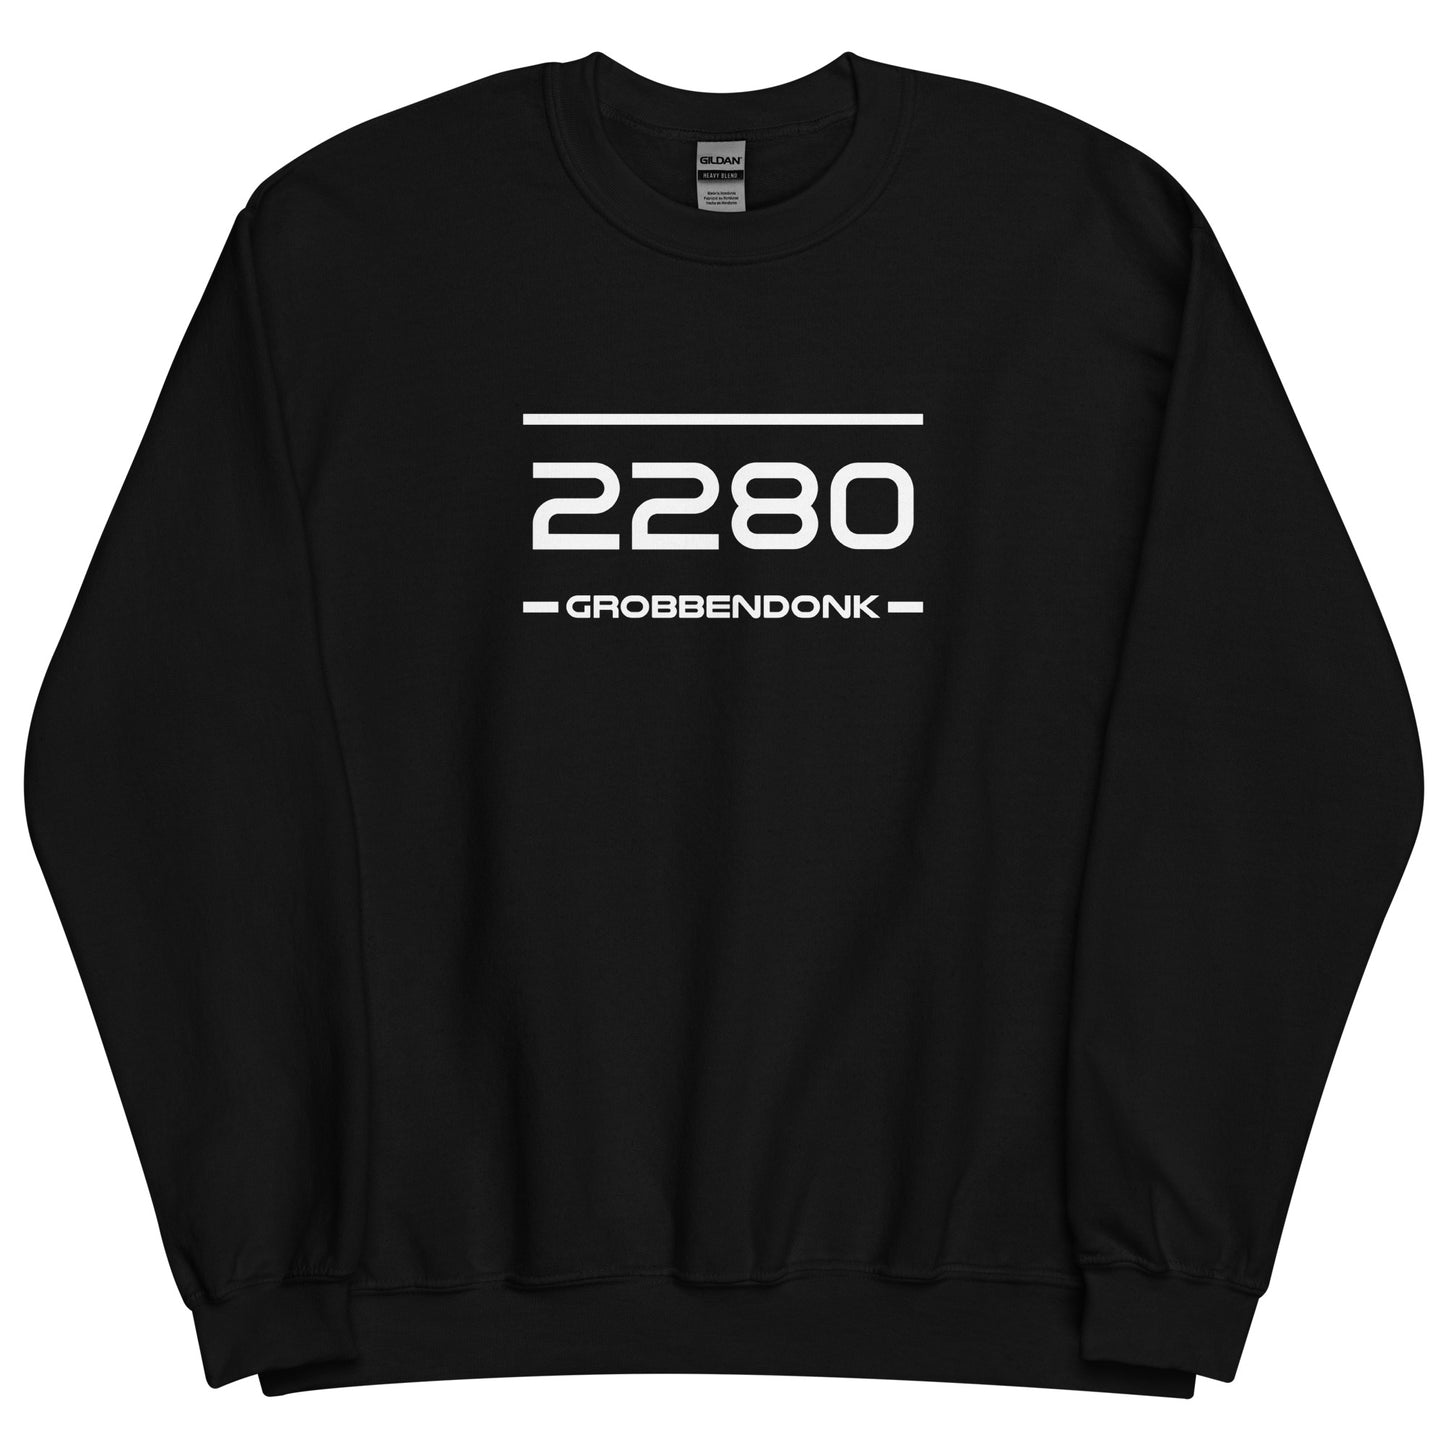 Sweater - 2280 - Grobbendonk (M/V)